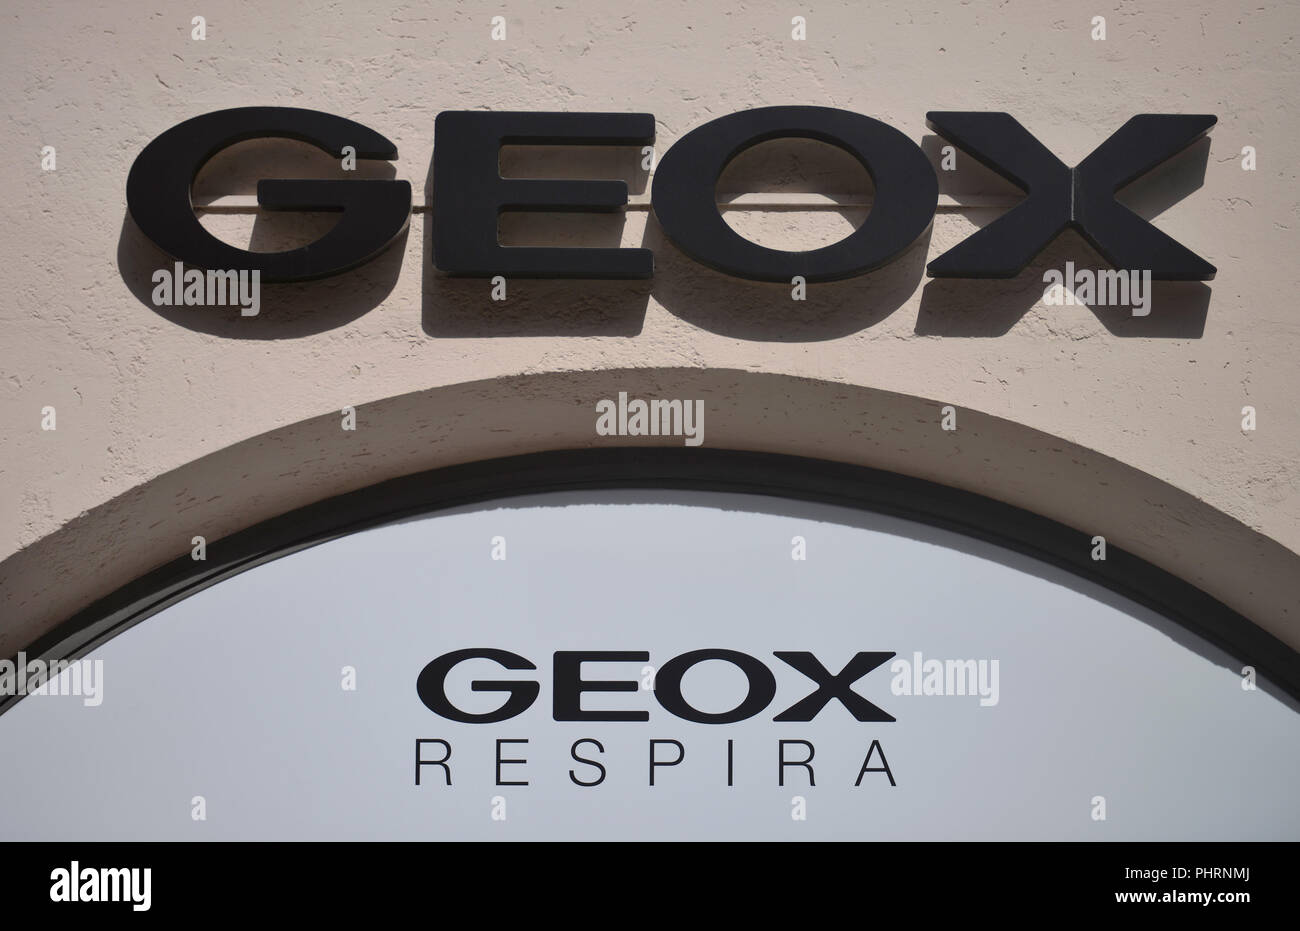 inventar India recibo Geox respira fotografías e imágenes de alta resolución - Alamy